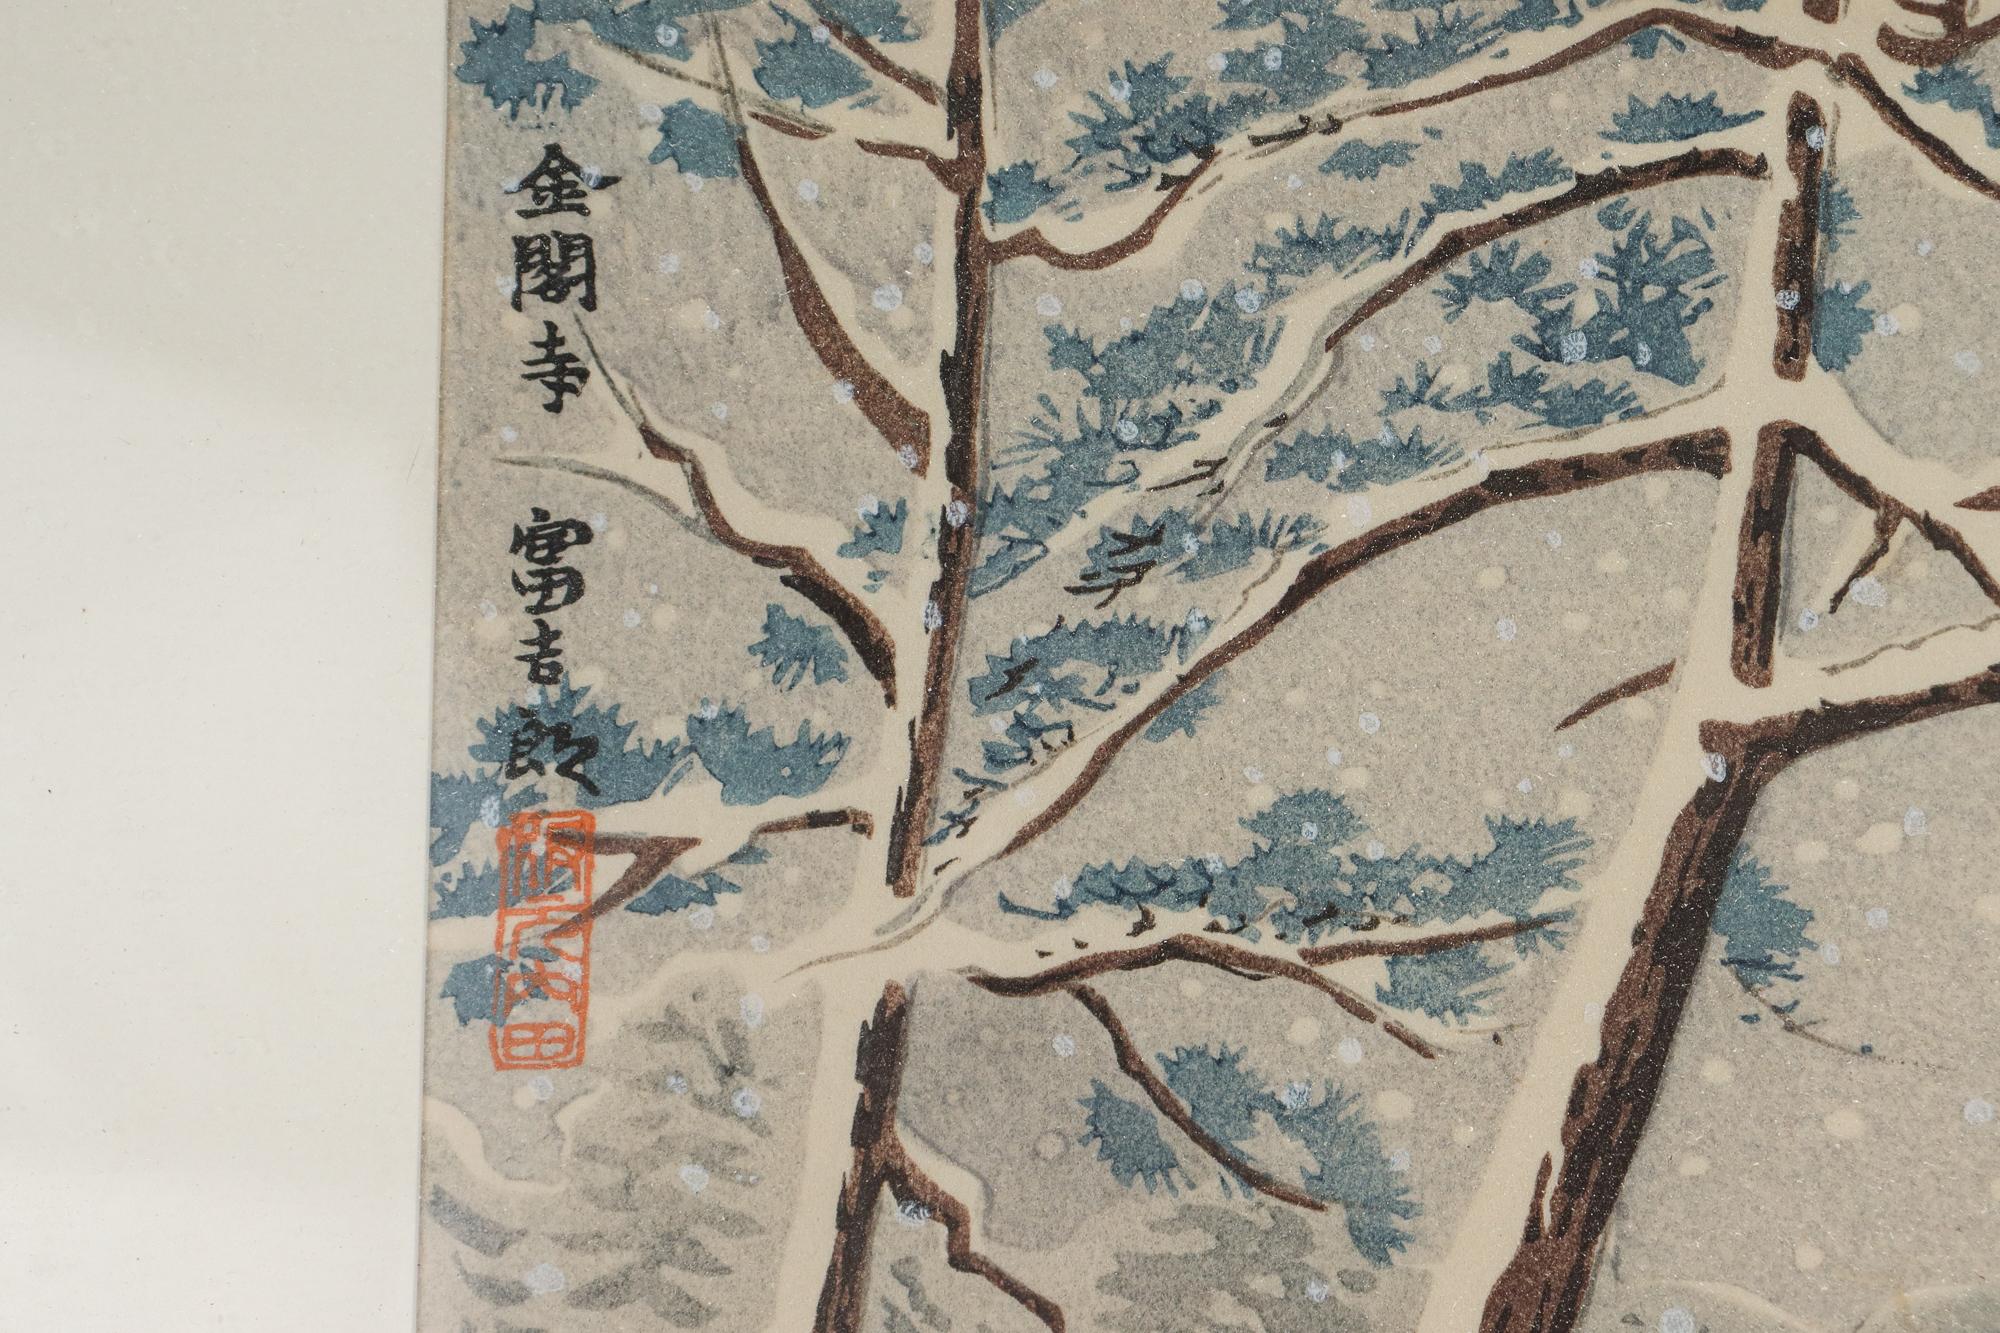 Vintage Japanese Ukiyo-e Print of Kinkaku-ji in Snow by Tokuriki Tomikichiro For Sale 2